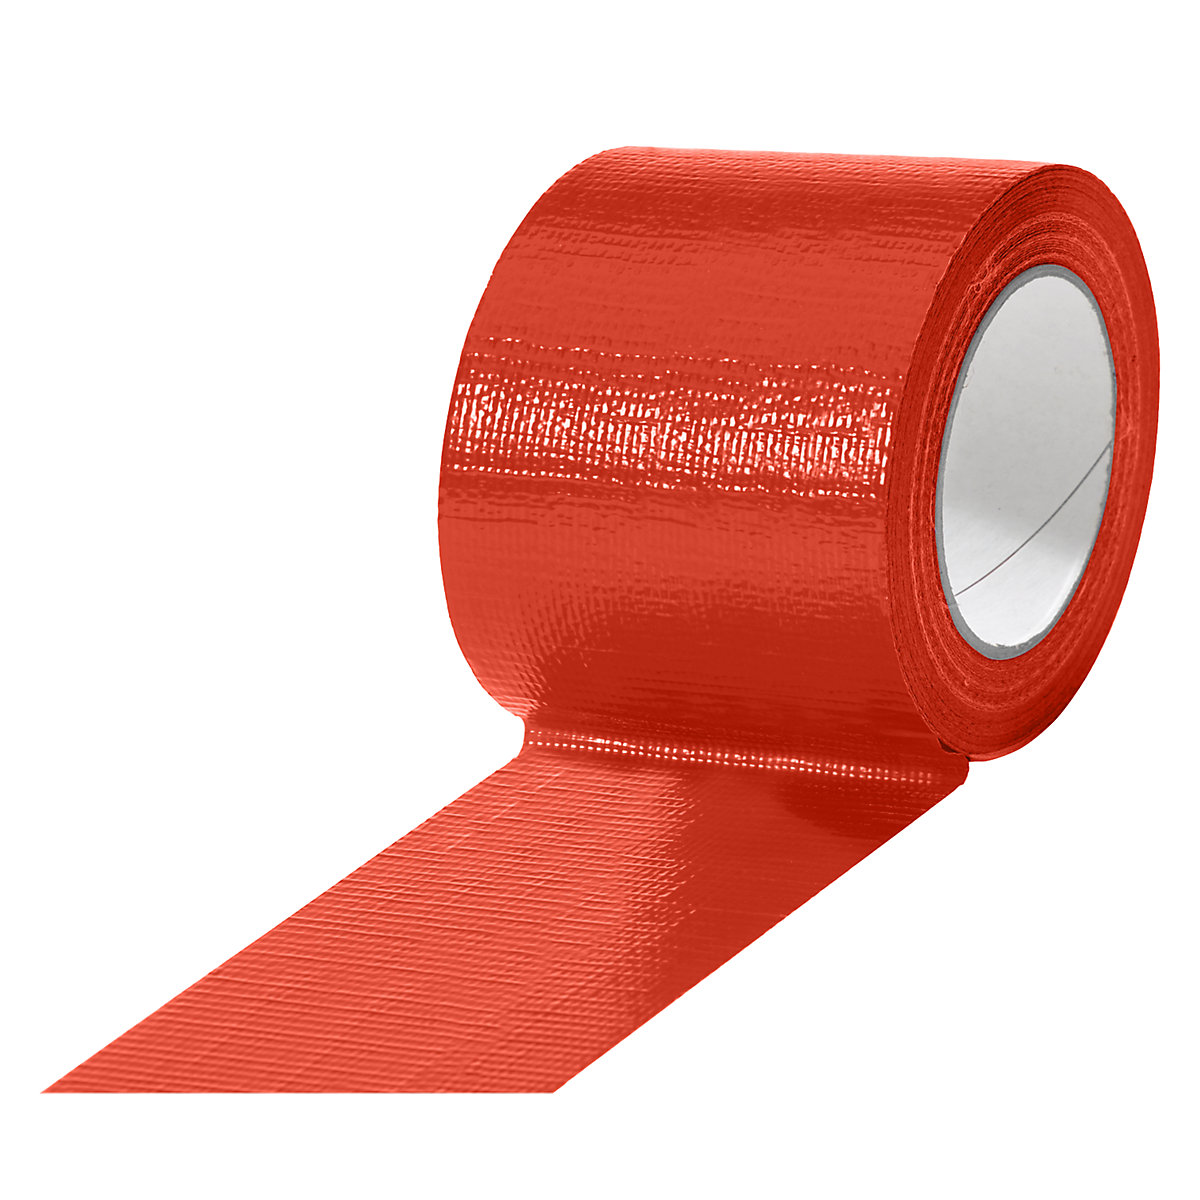 Tkaninová páska, v různých barvách, bal.j. 12 rolí, červená, šířka pásky 75 mm-12